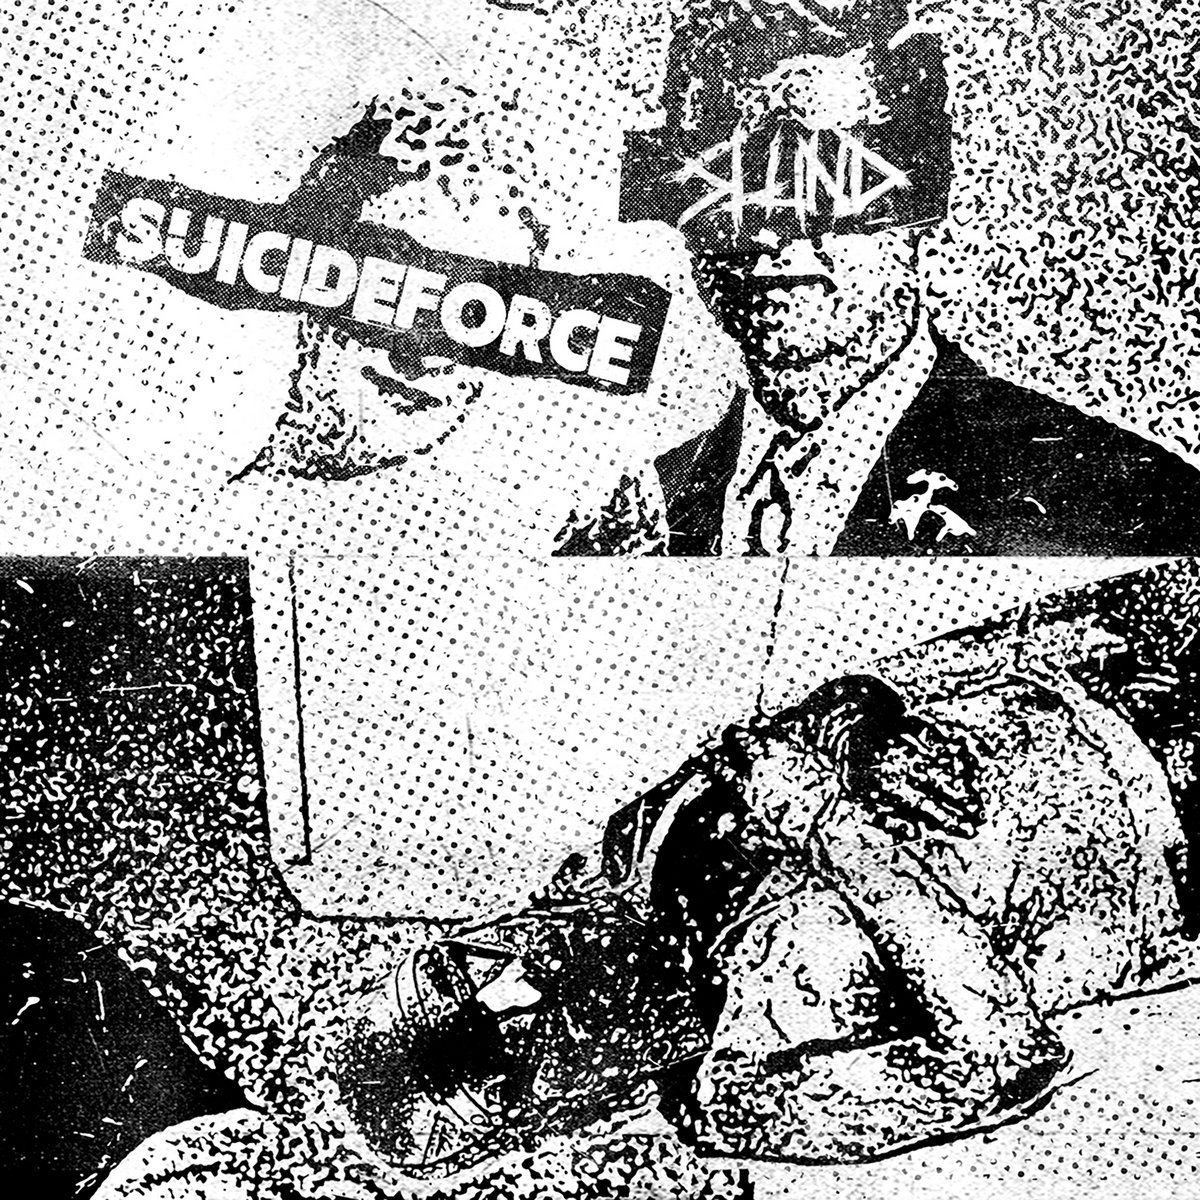 SLUND - Suicideforce / Slund cover 